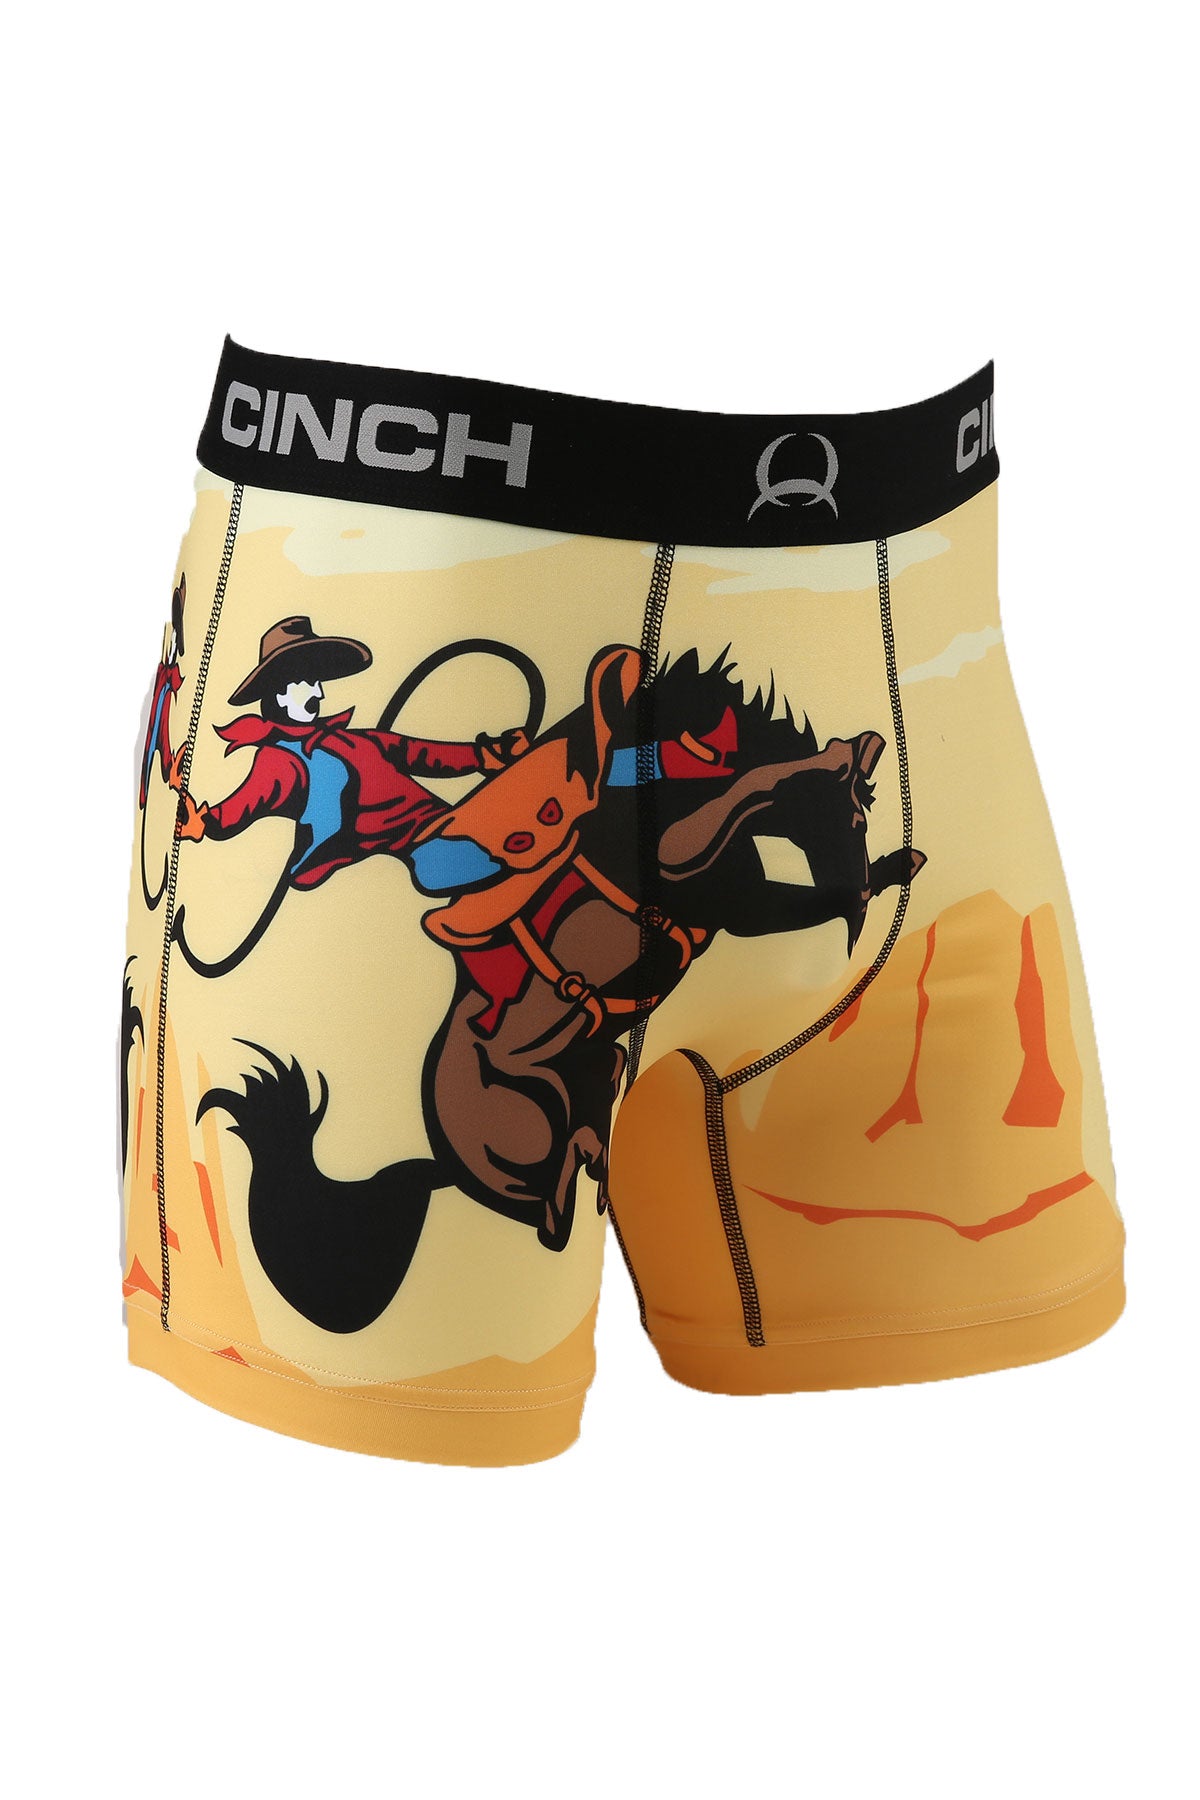 Cinch Cowboy Underwear